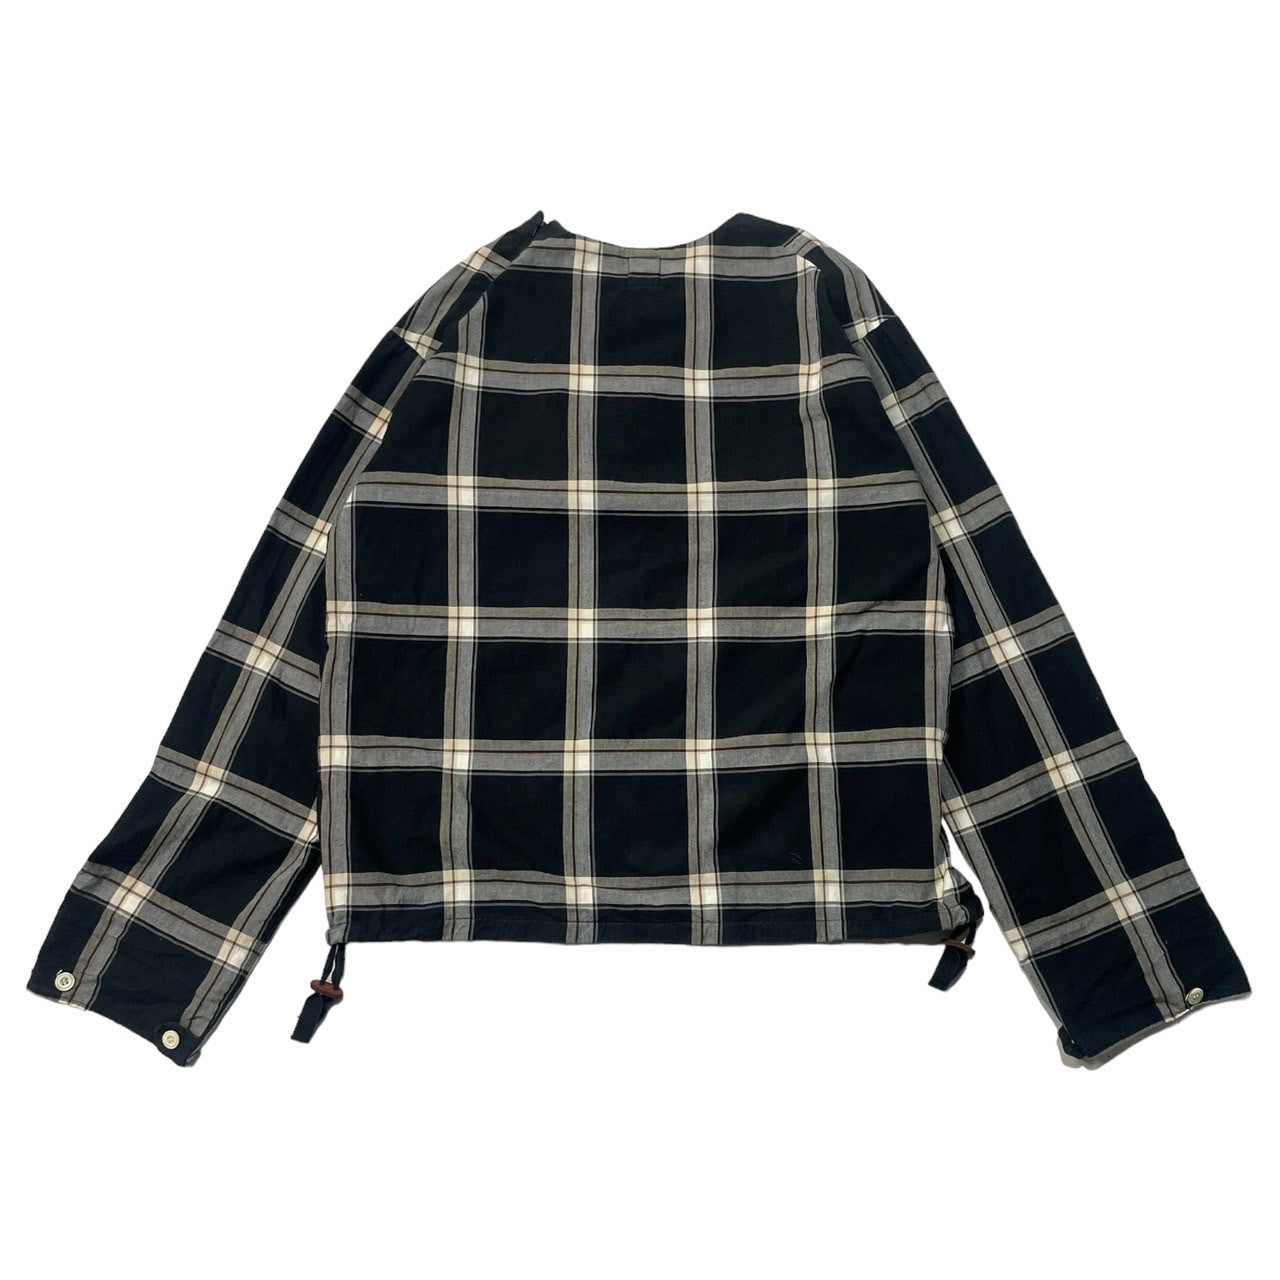 SUNSEA(サンシー) 17SS pullover check shirt プルオーバー チェック シャツ 17S23 SIZE 3(L) ブラック×グレー